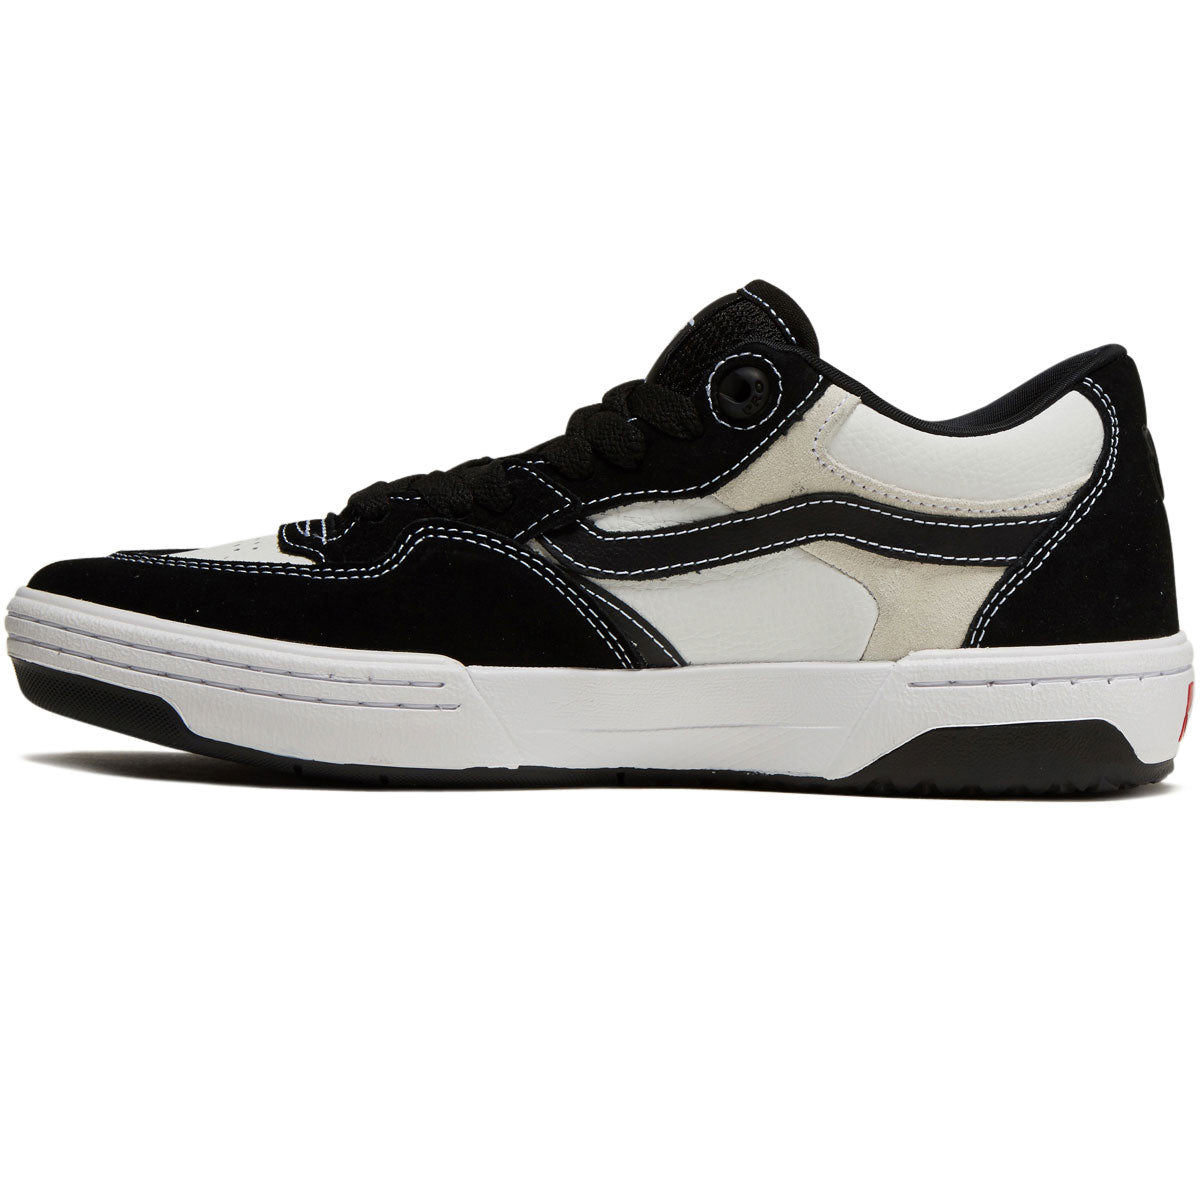 Vans Rowan 2 Shoes - Black/Black/White image 2